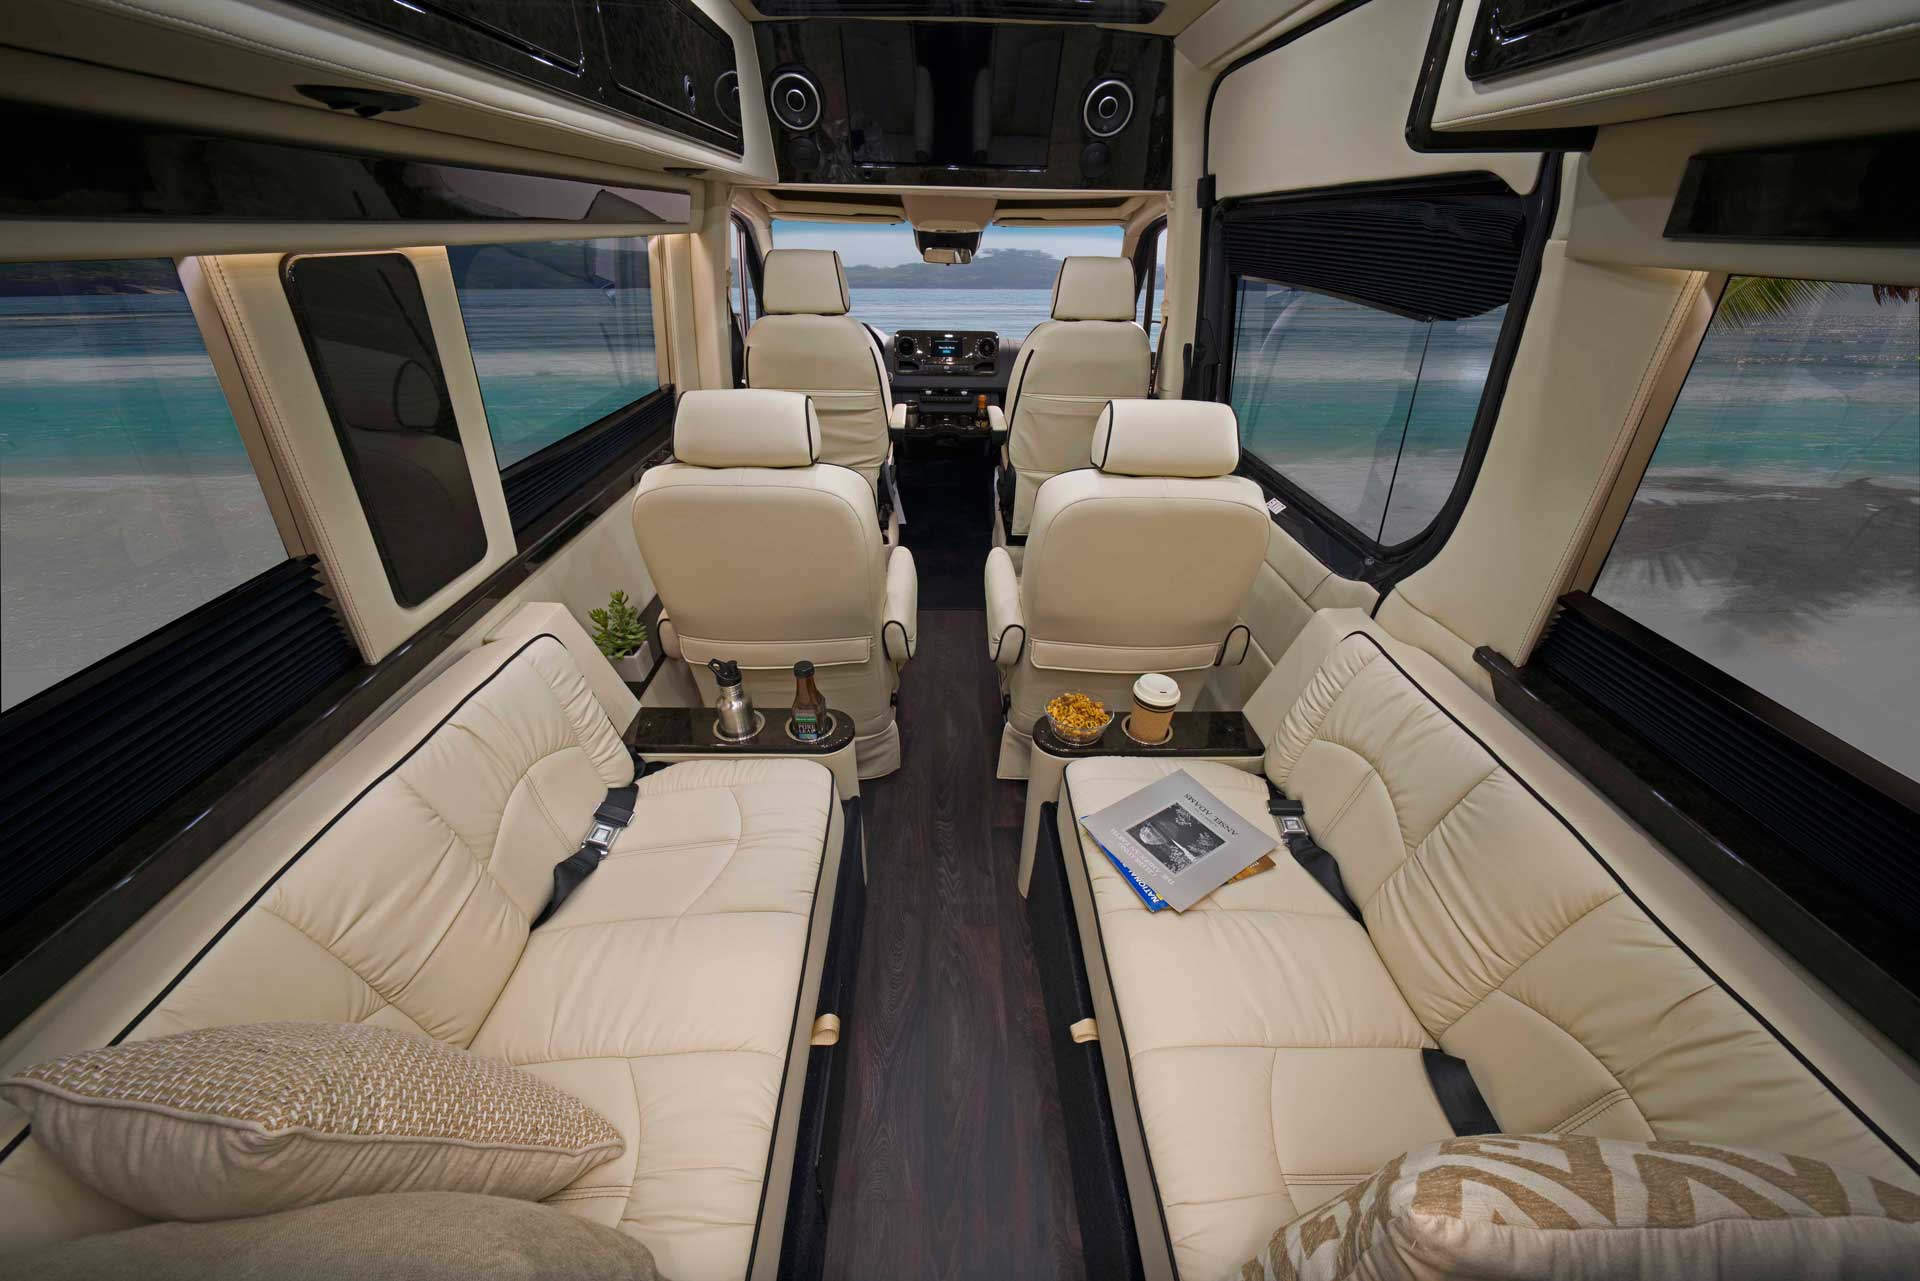 luxury touring vans